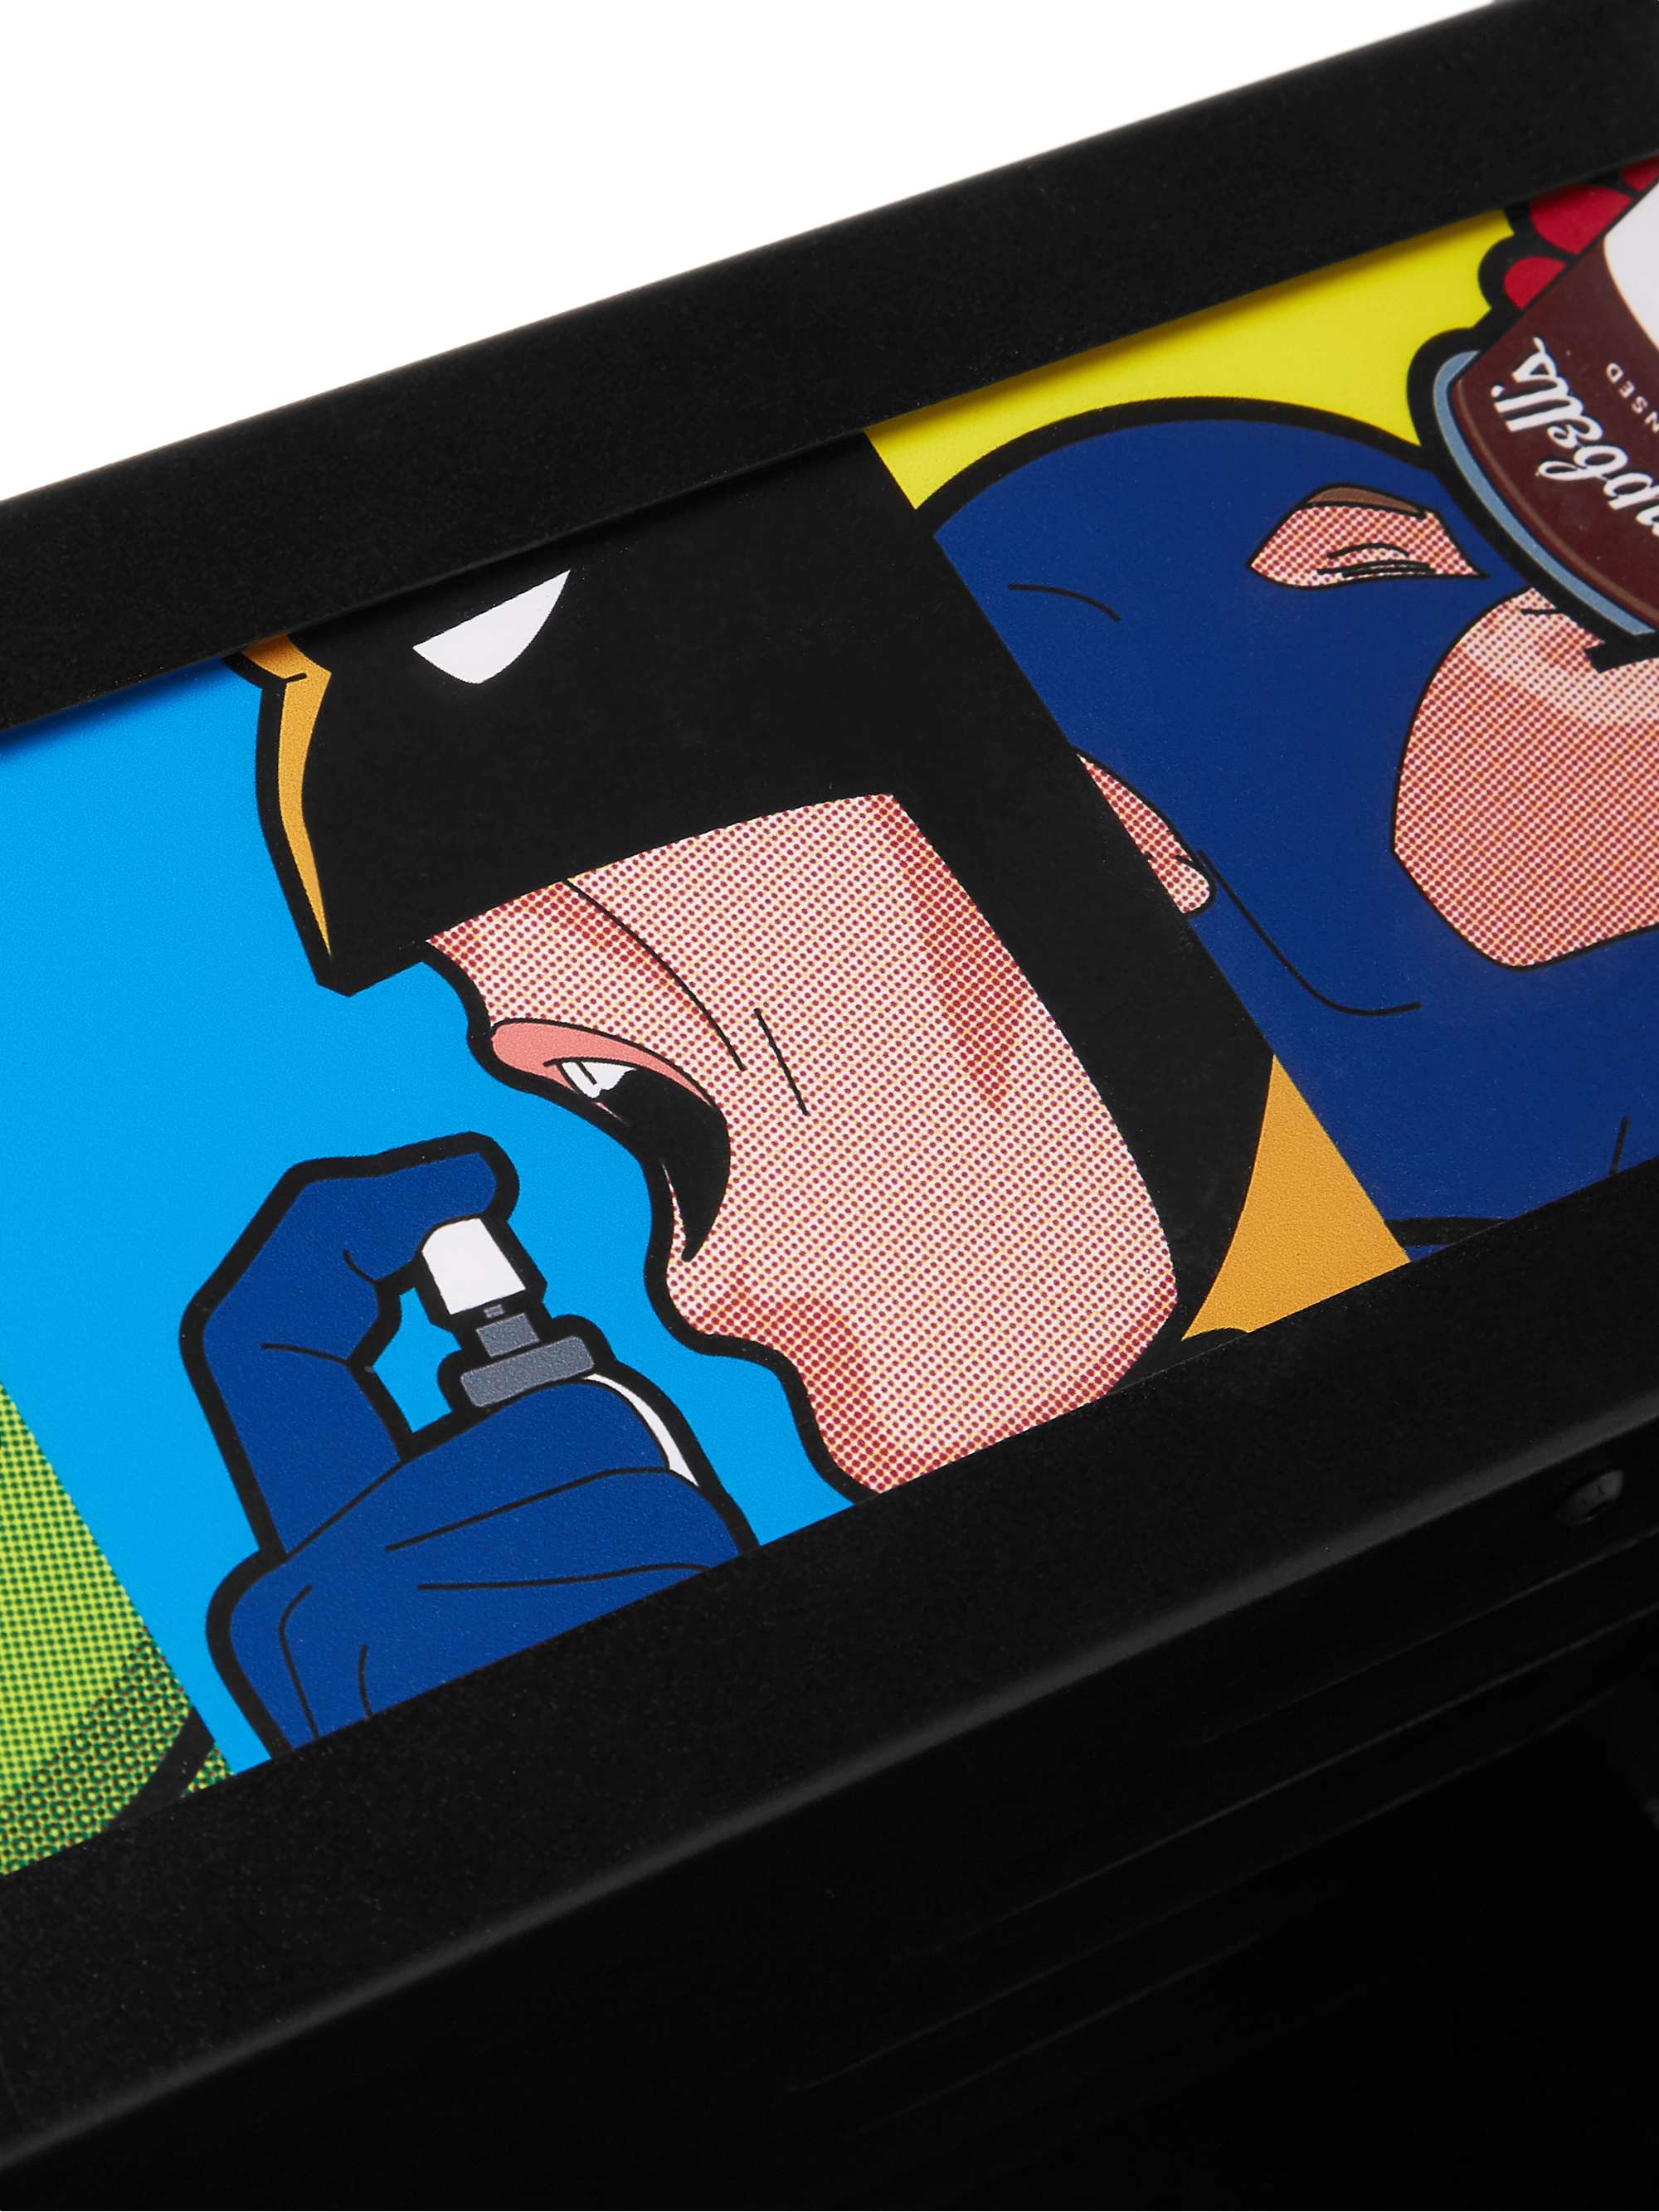 Neo Legend Bat Brush Compact Arcade Game